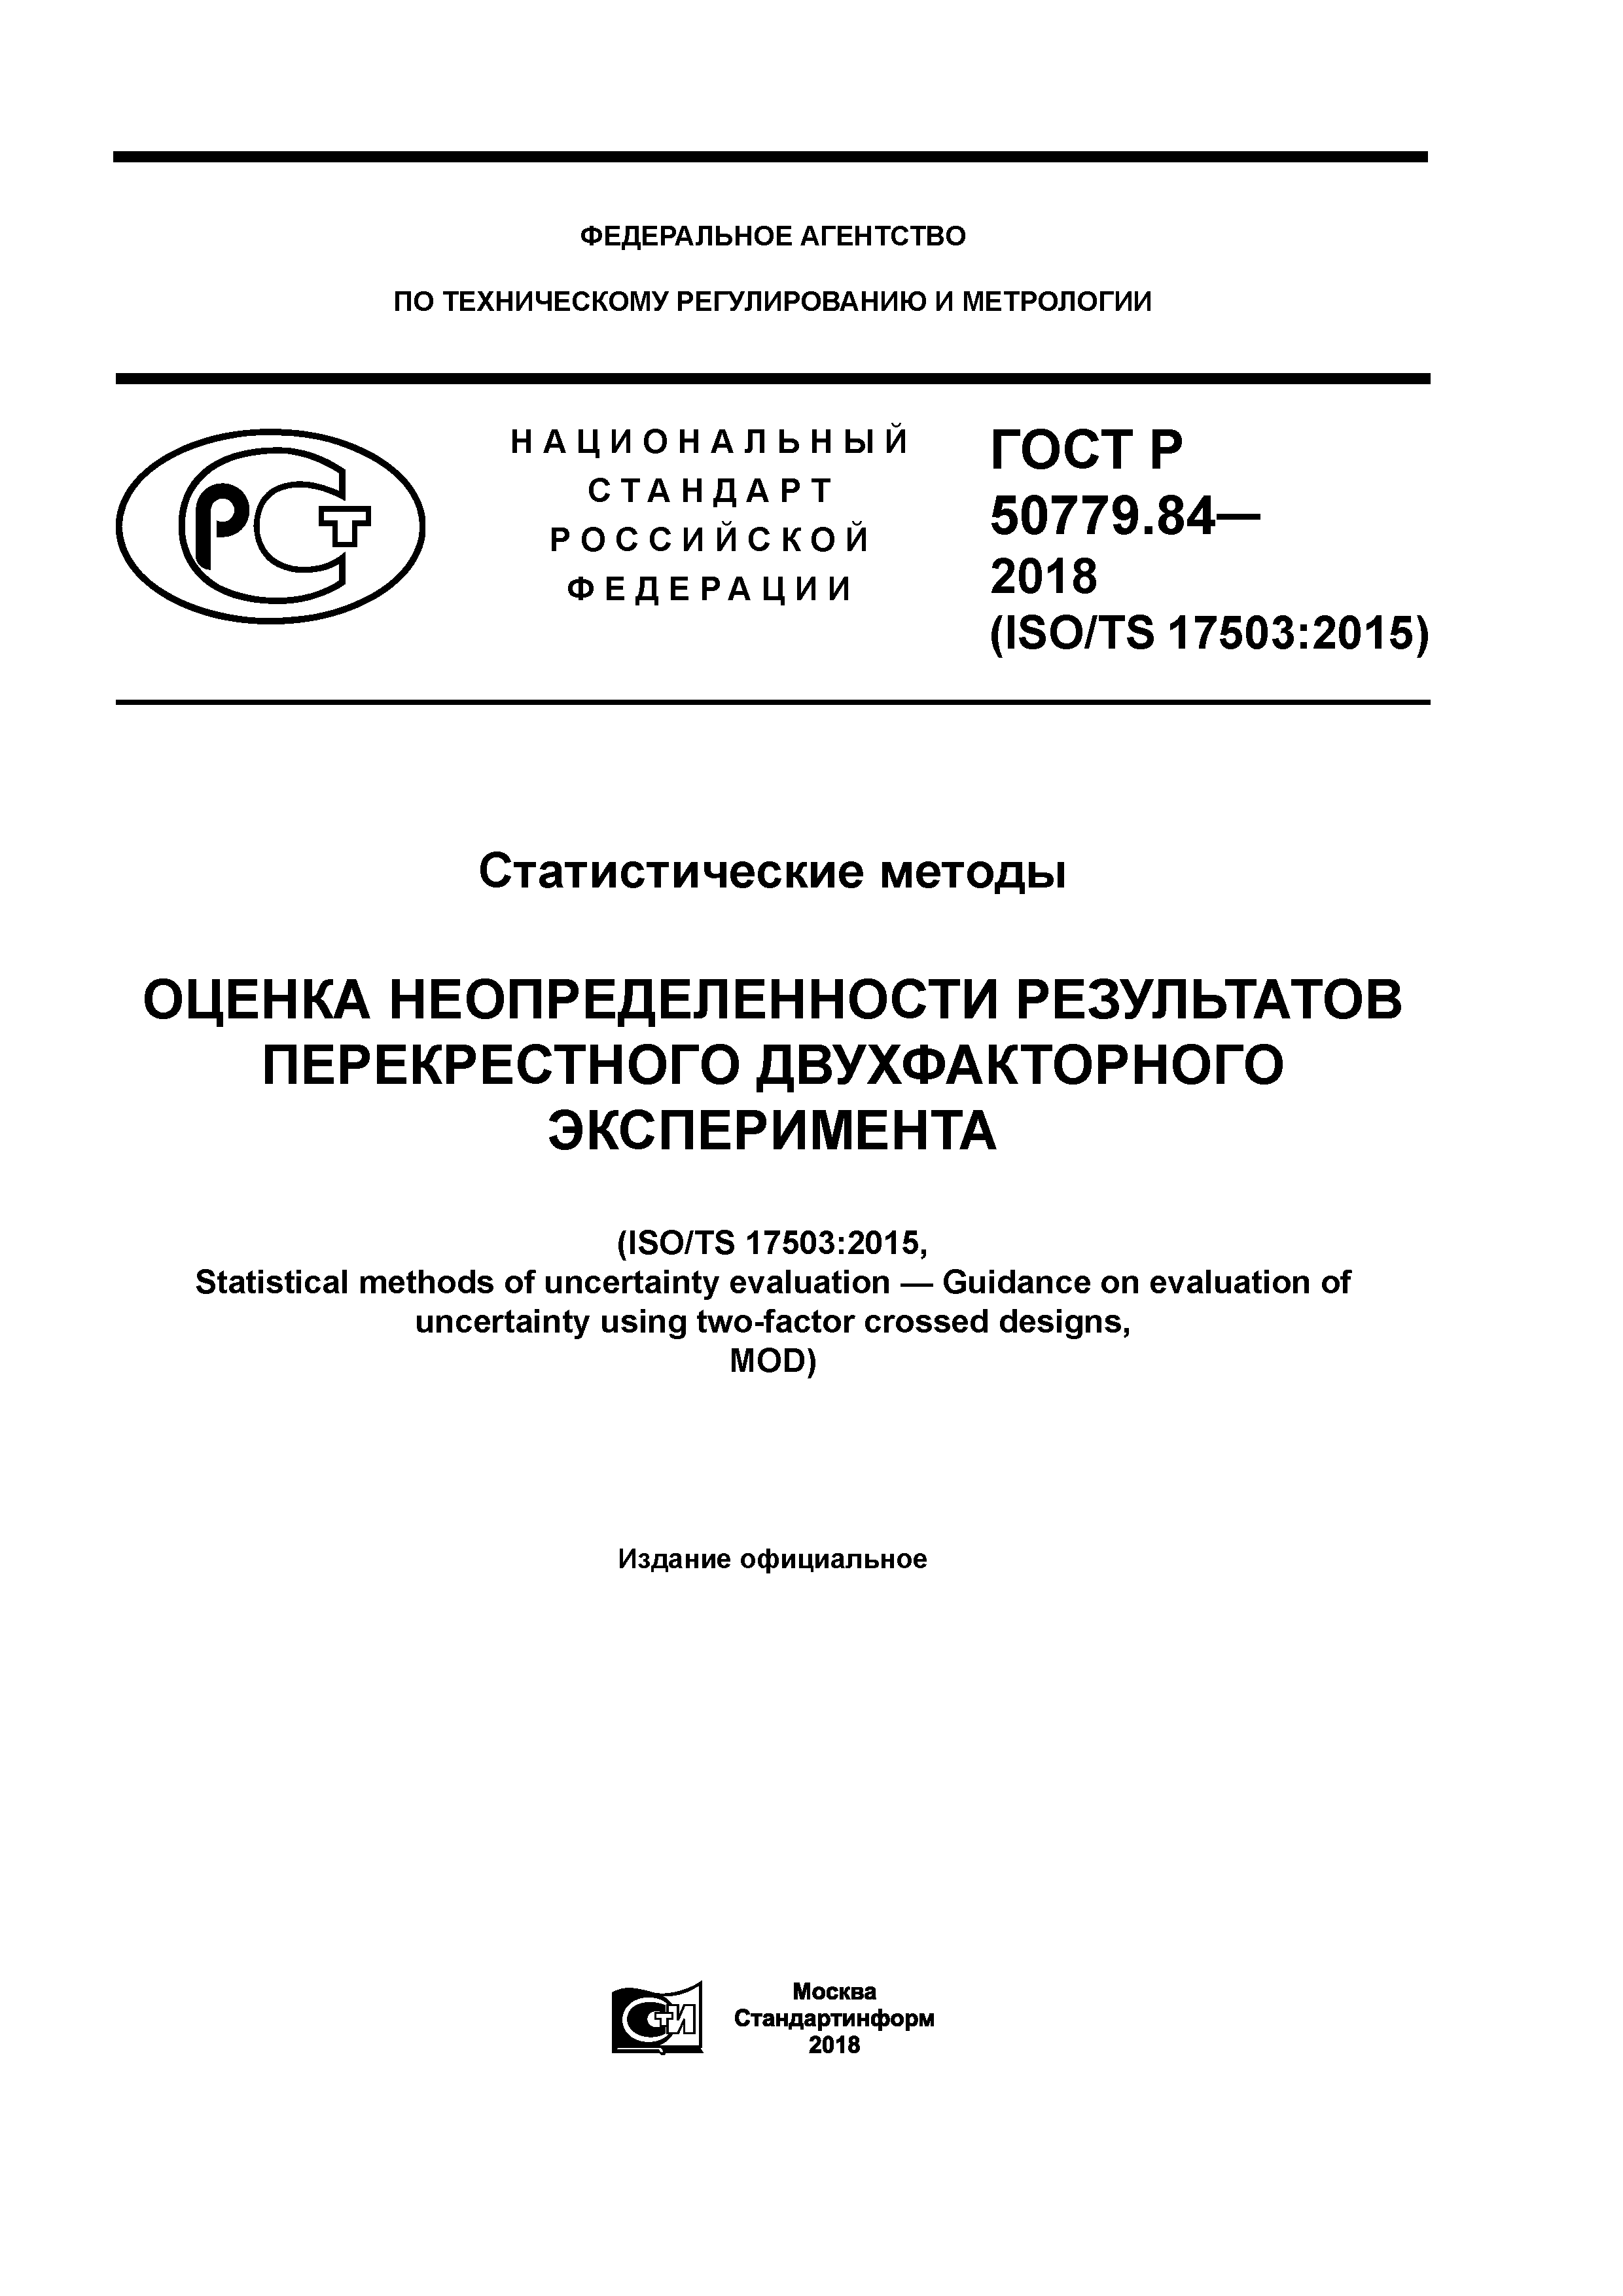 ГОСТ Р 50779.84-2018